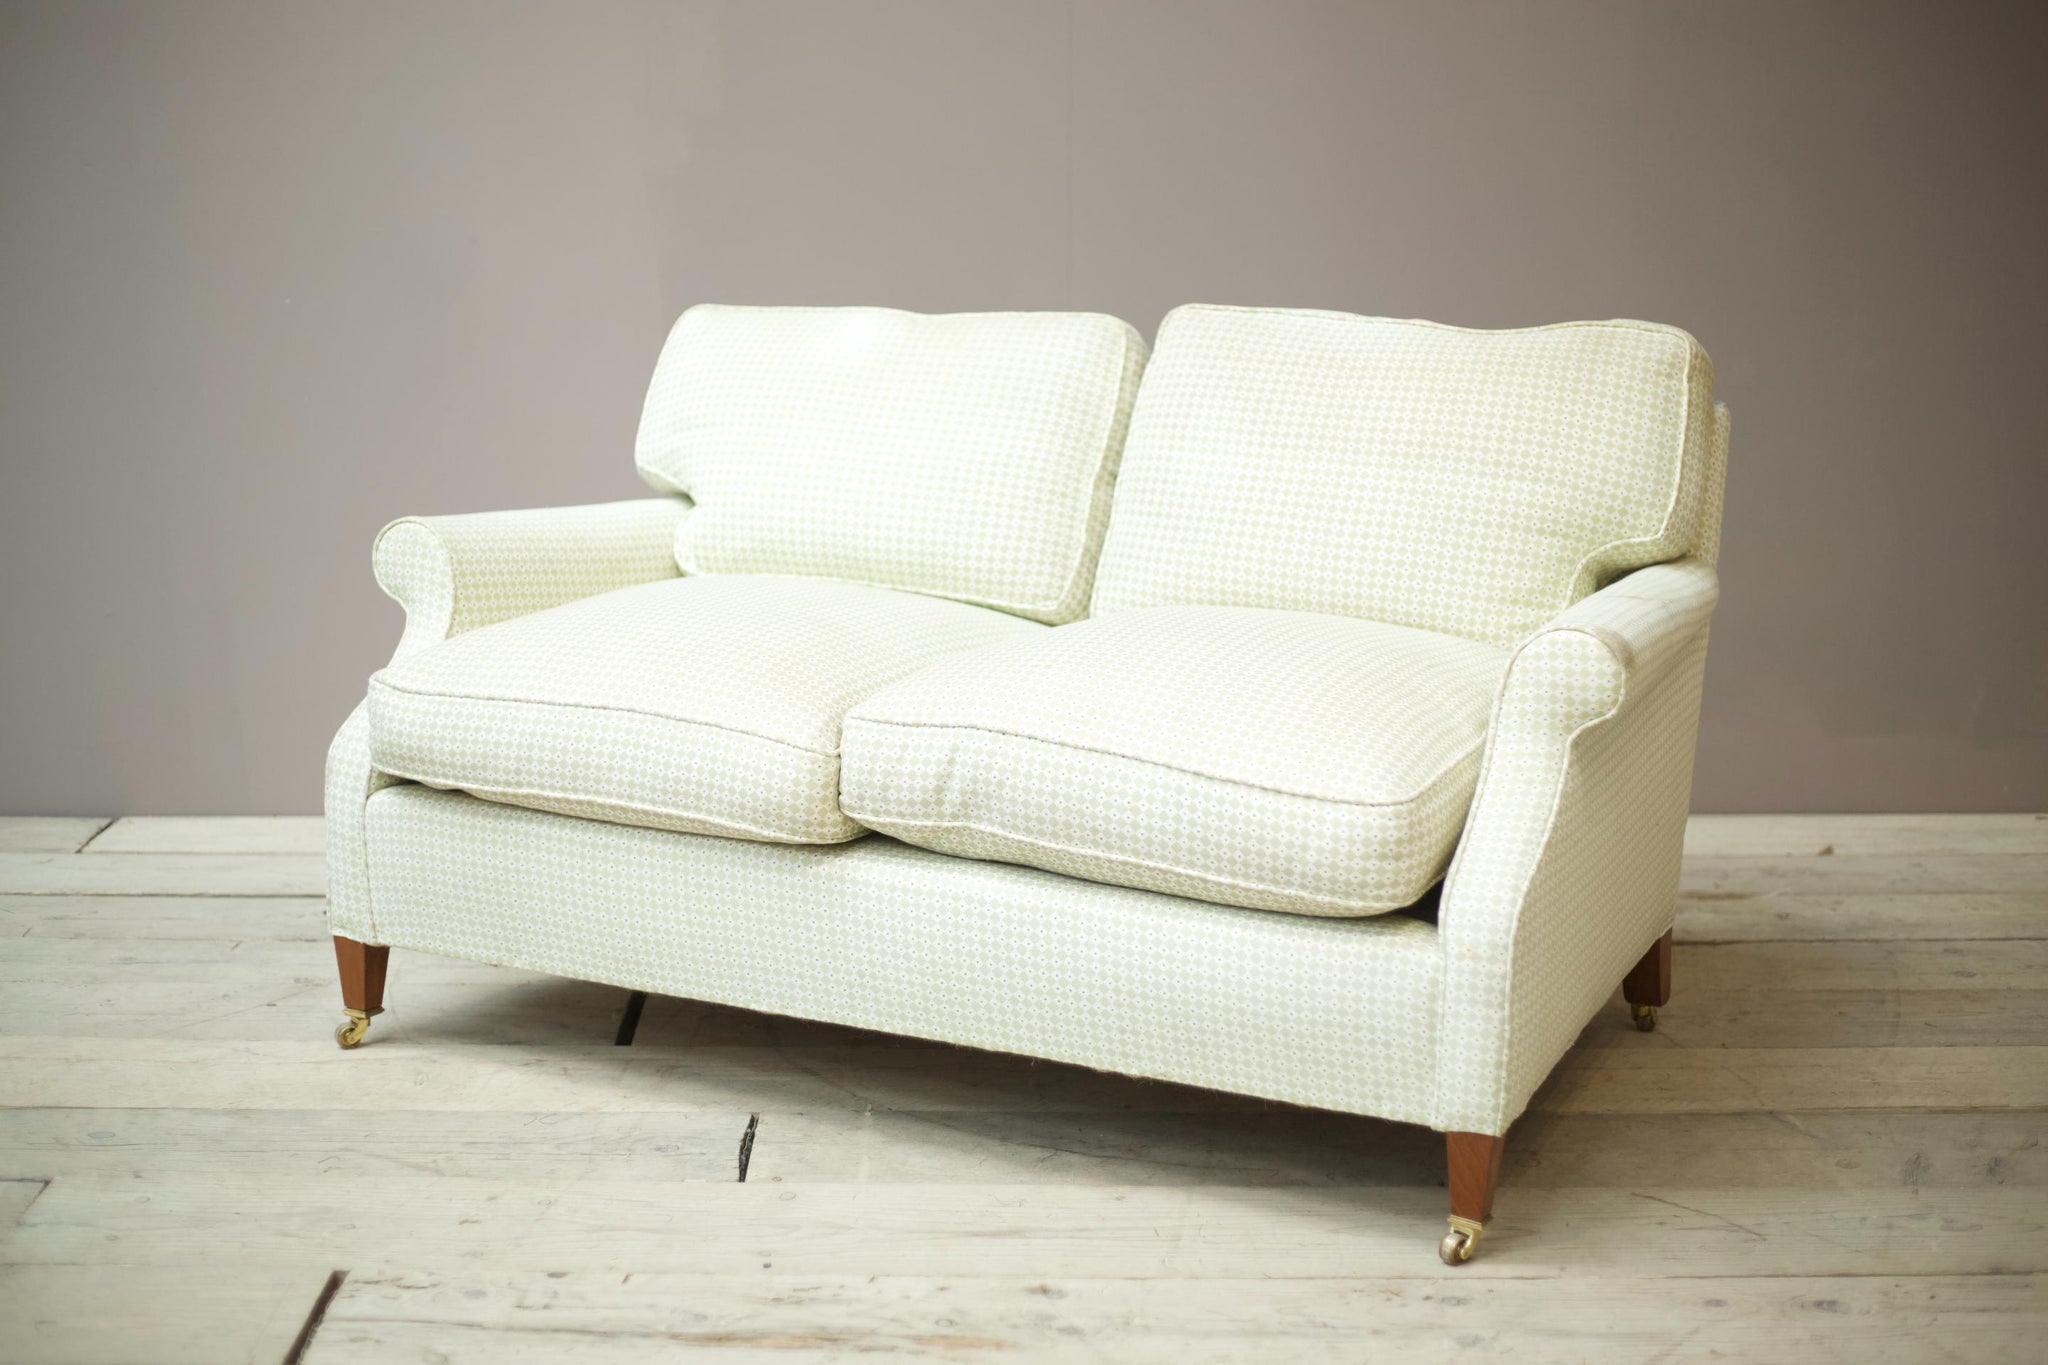 20th century Bespoke 2 seater sofa by Sean Cooper